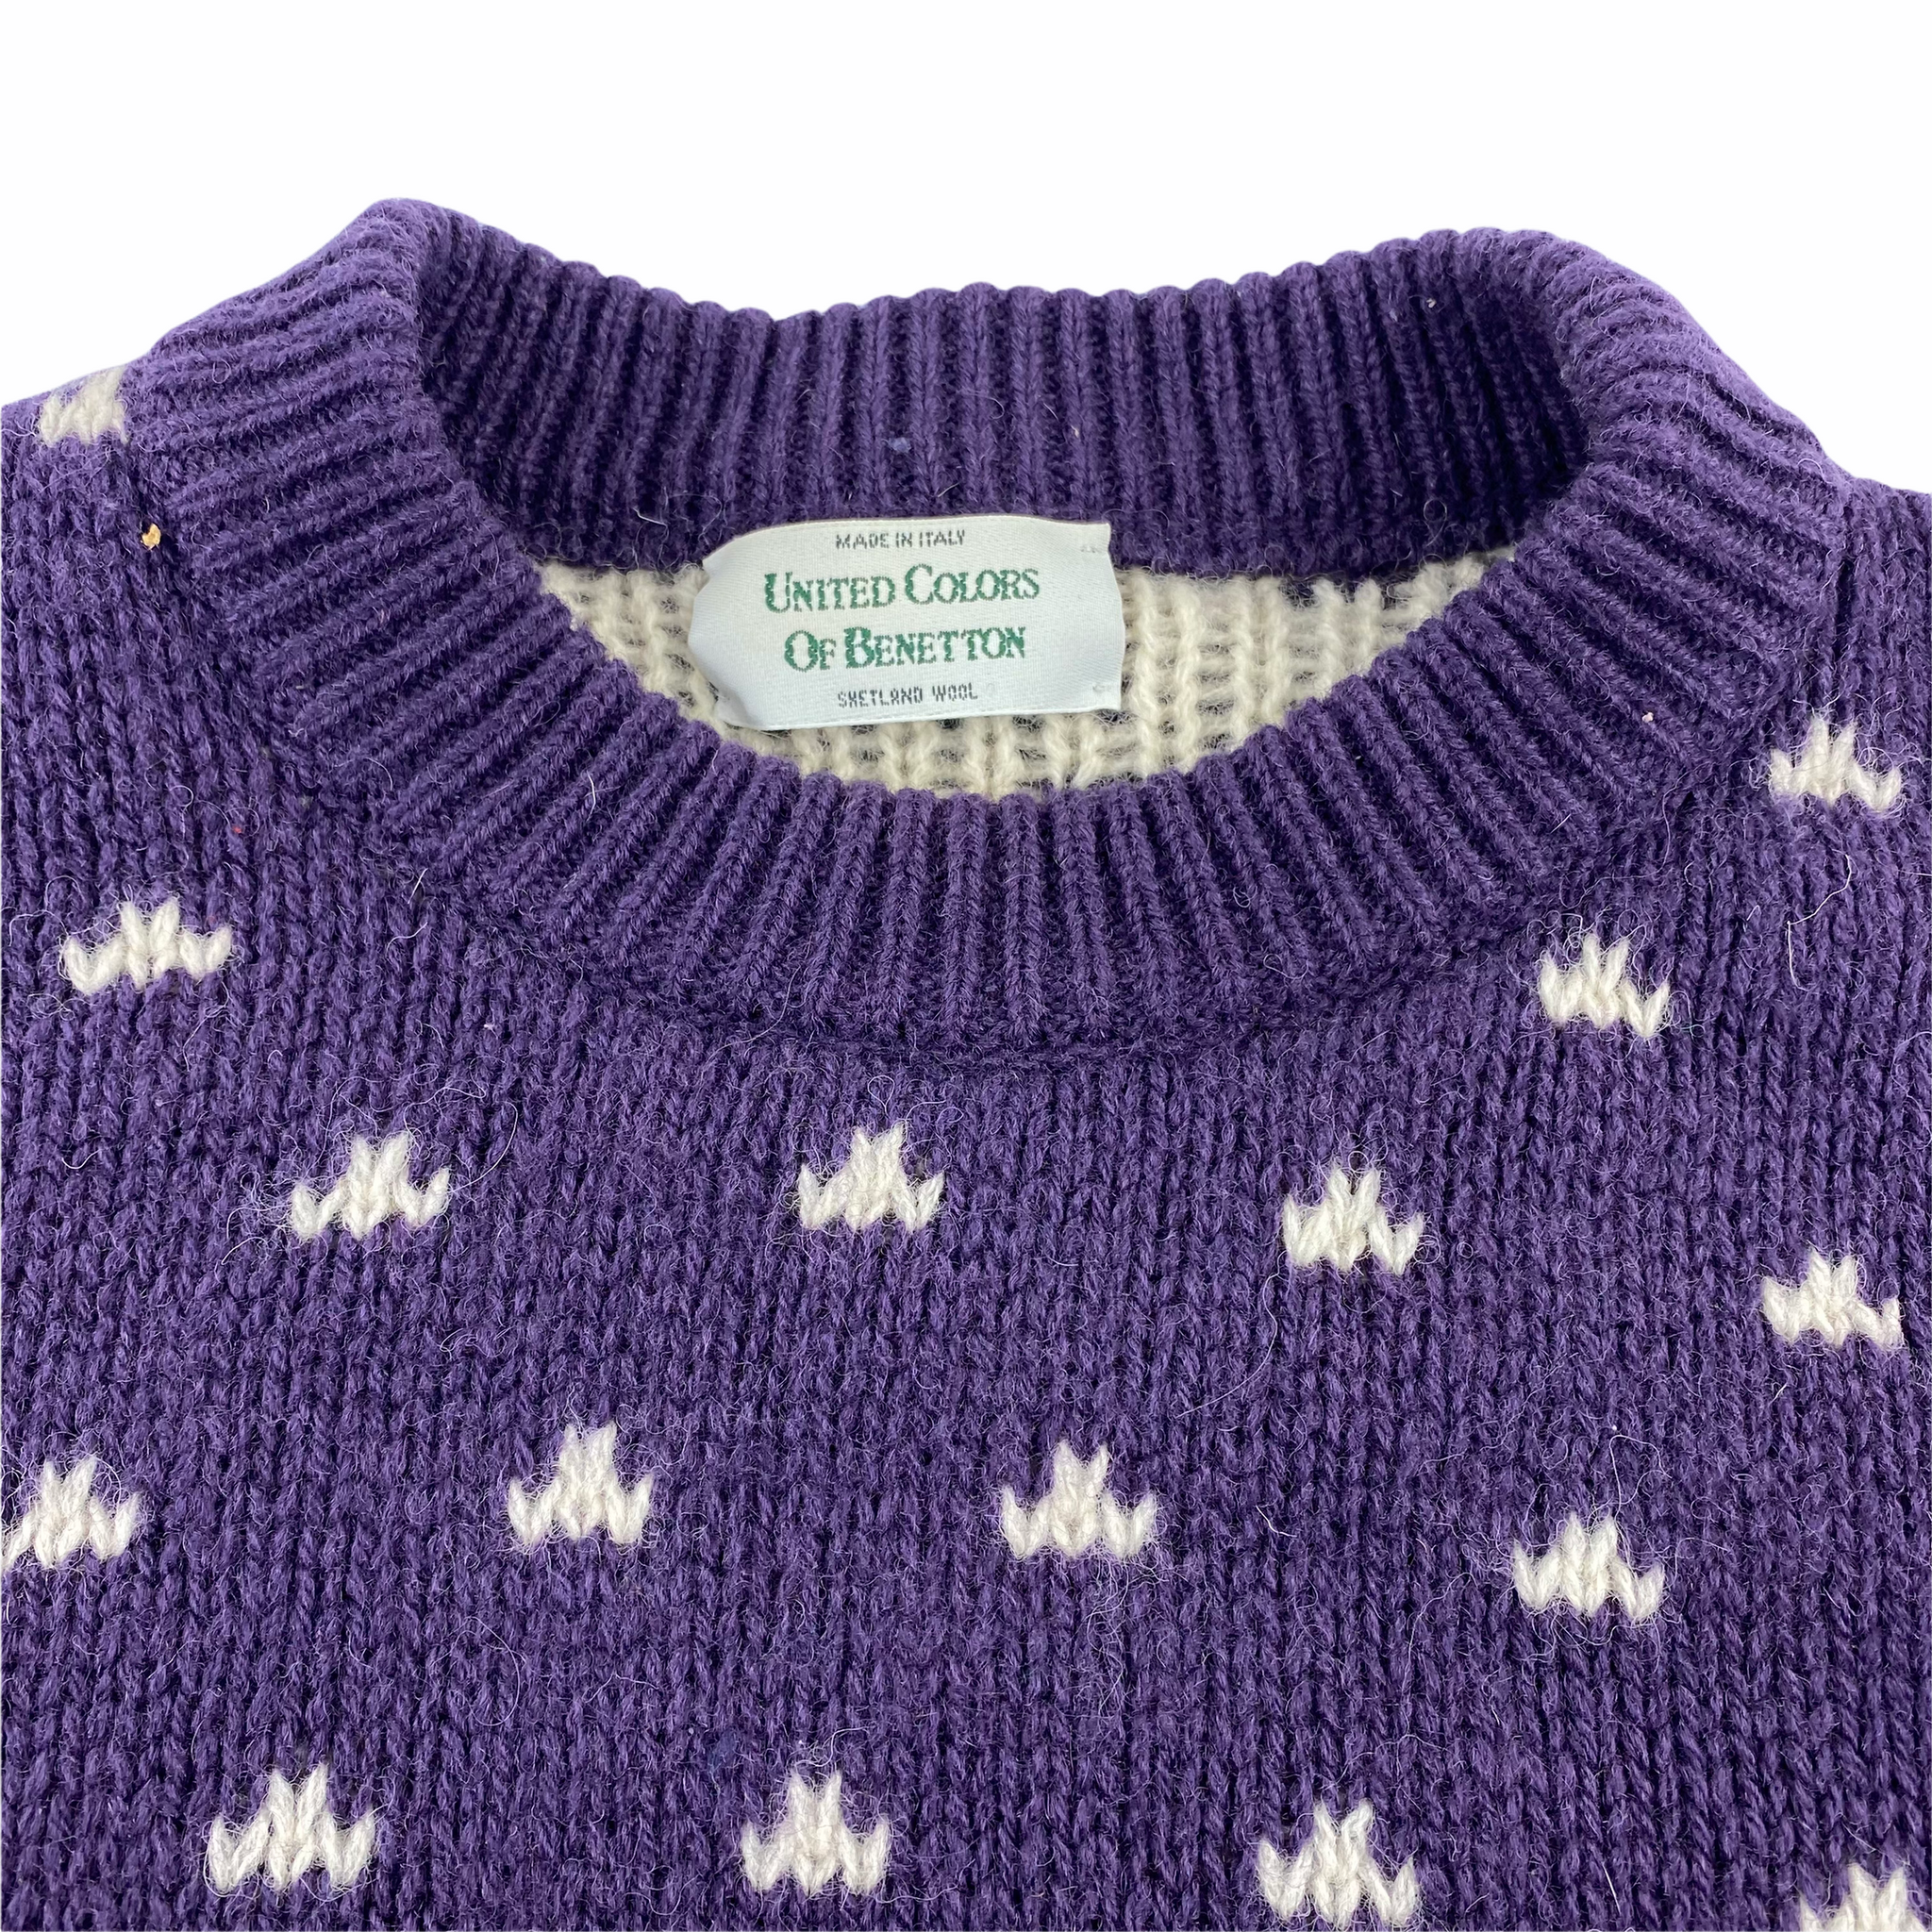 Benetton shetland wool sweater. Made in italy🇮🇹  L/XL